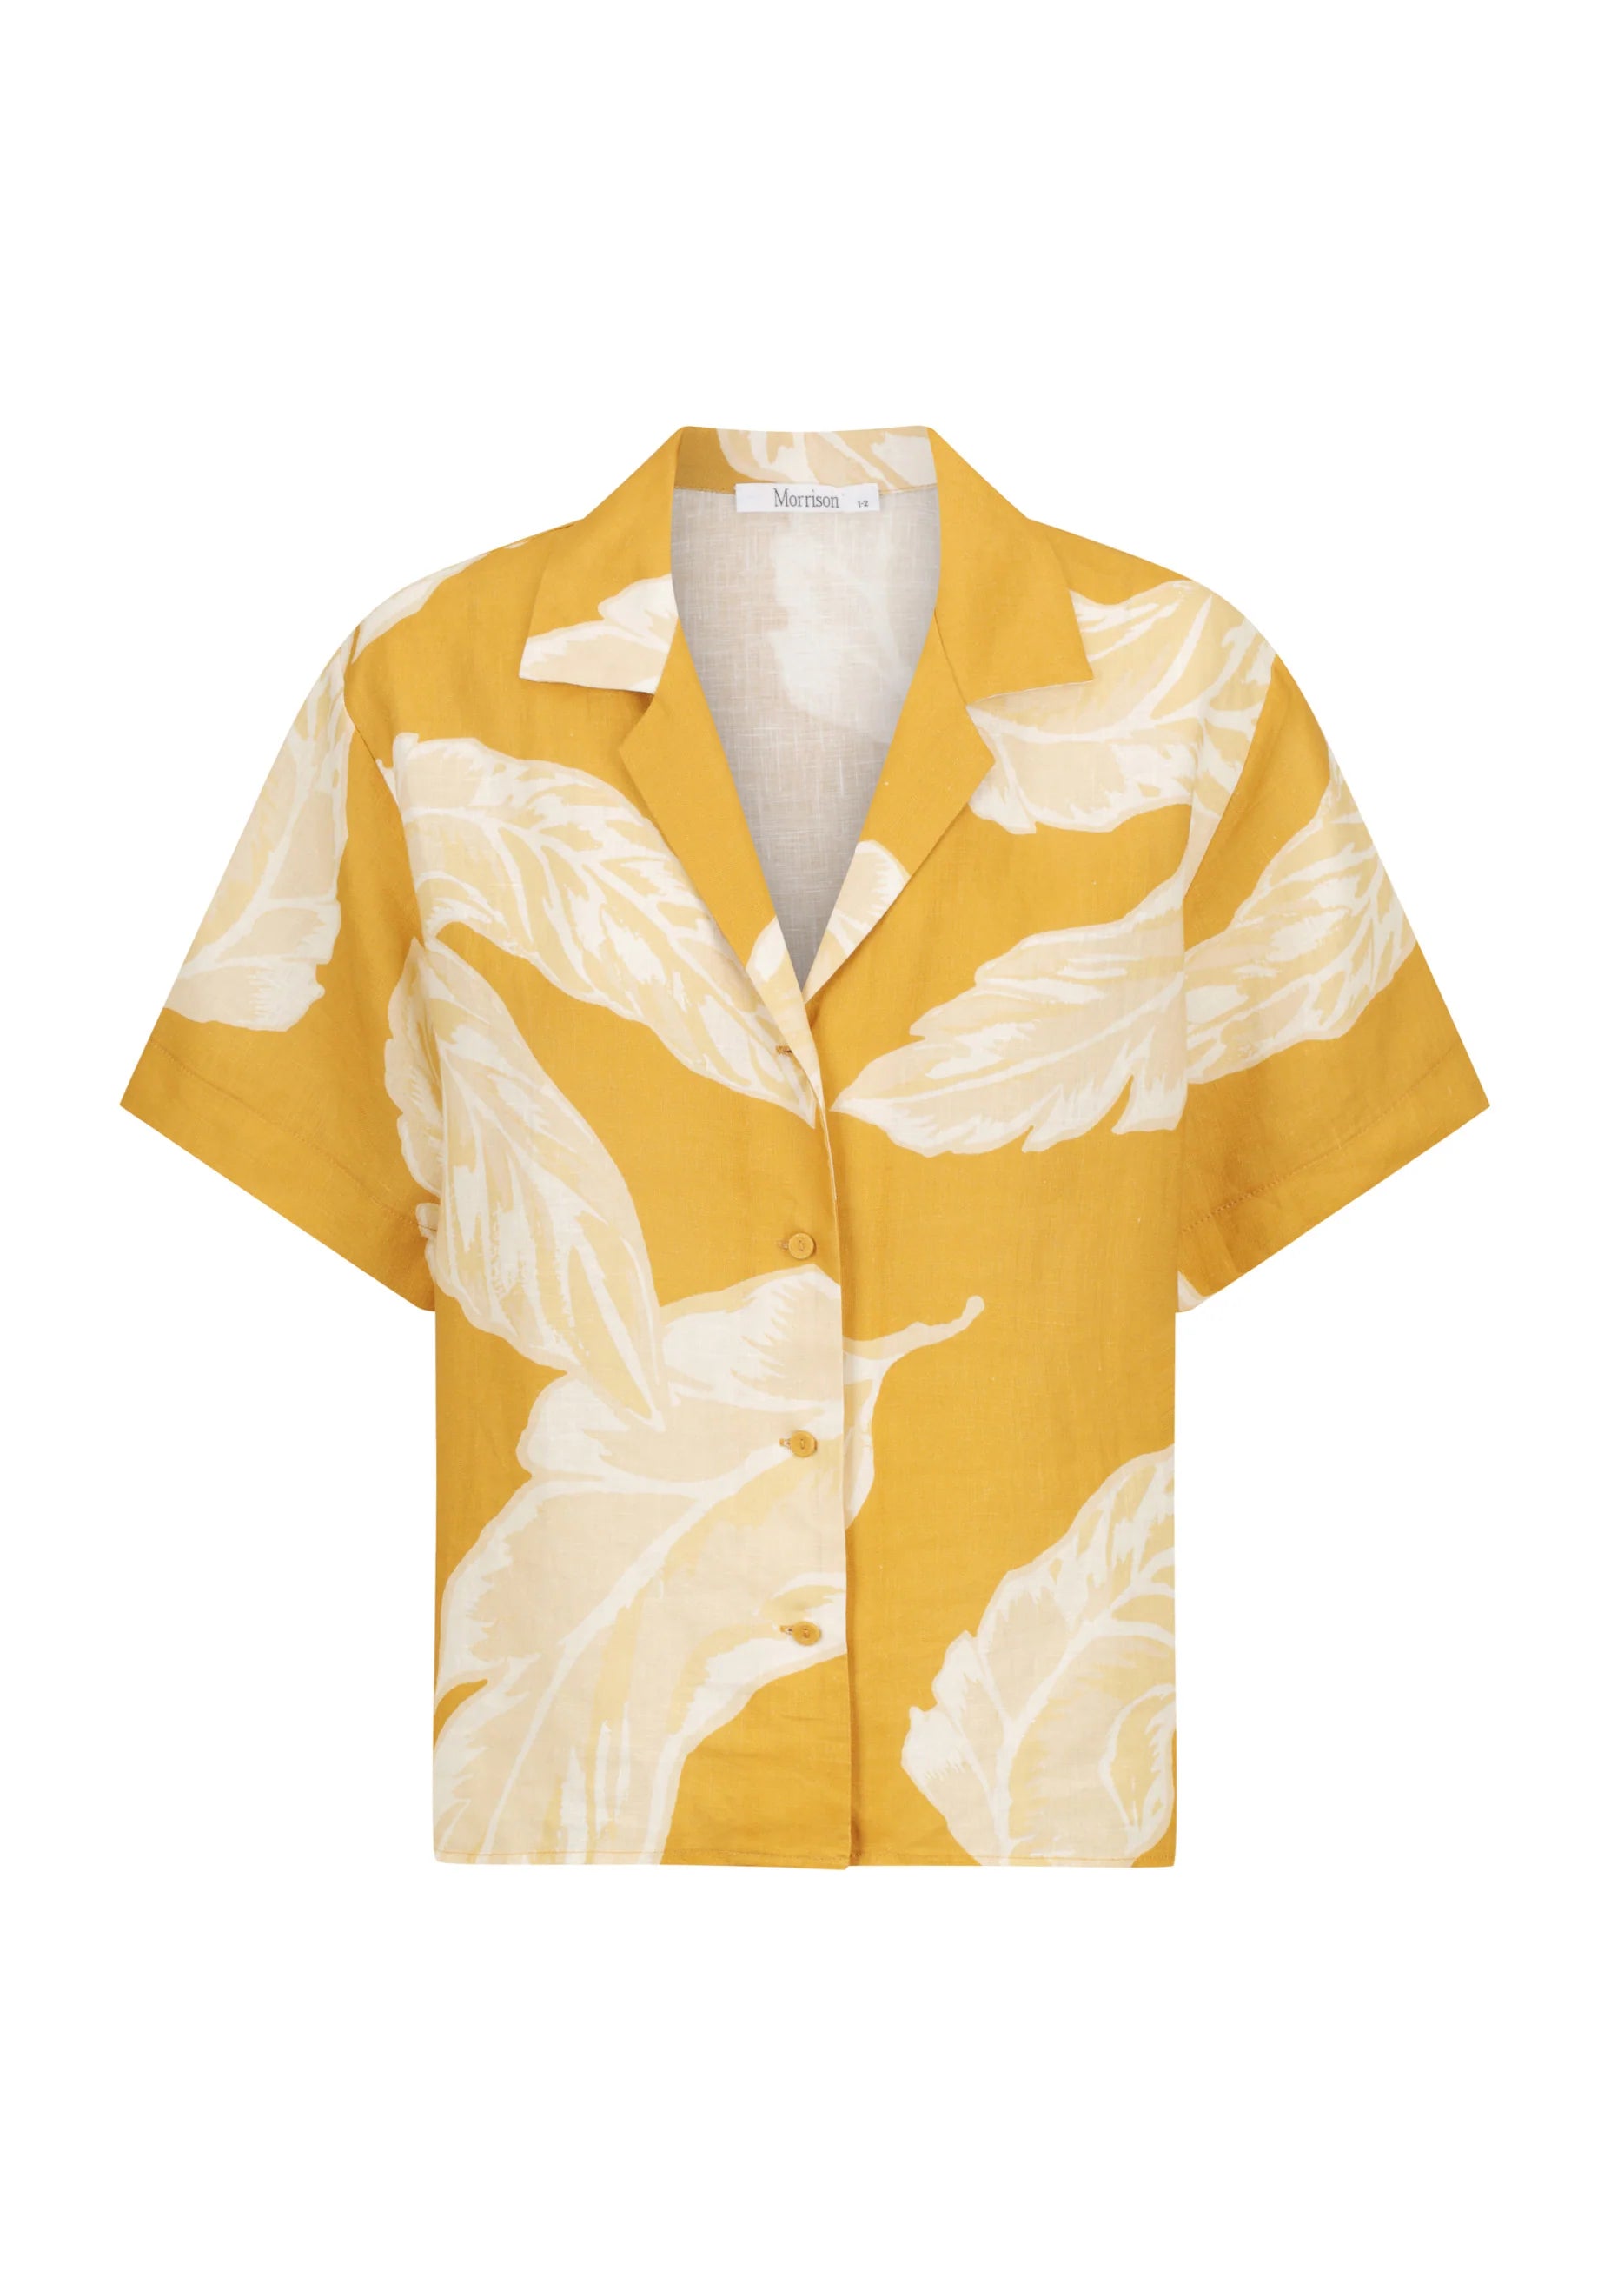 Morrison - Palma Linen Shirt